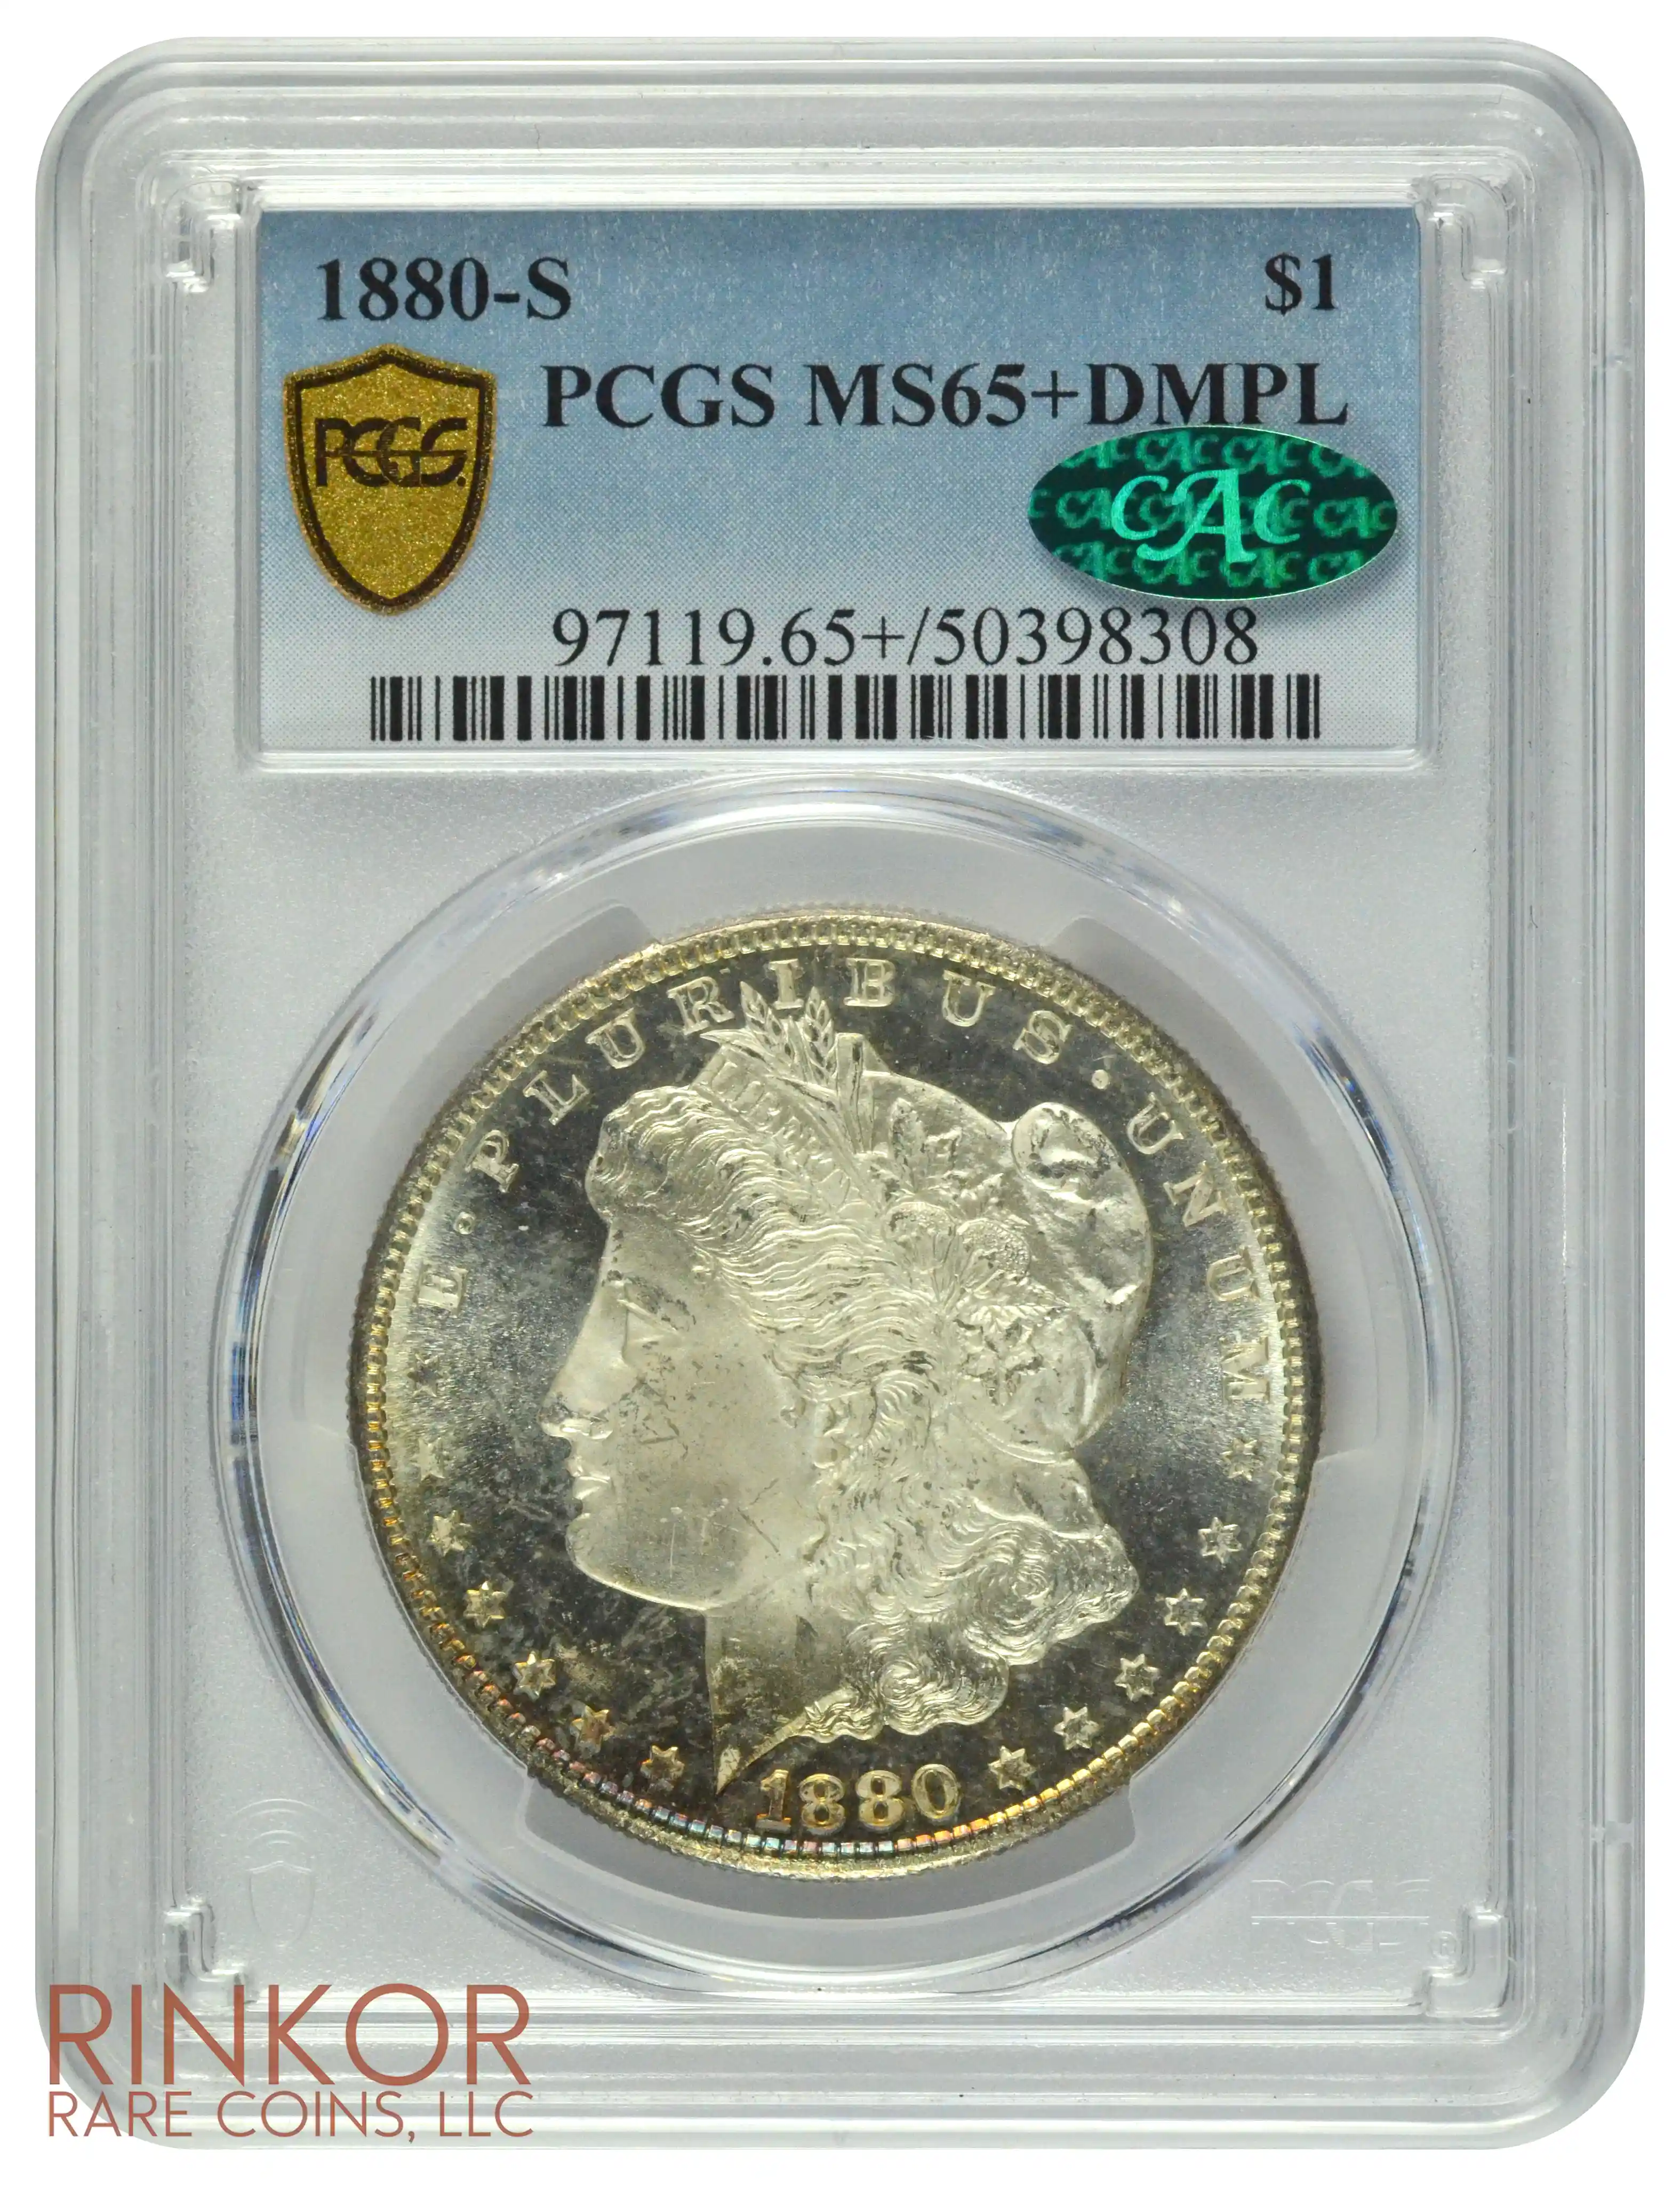 1880-S $1 PCGS MS 65+ DMPL CAC